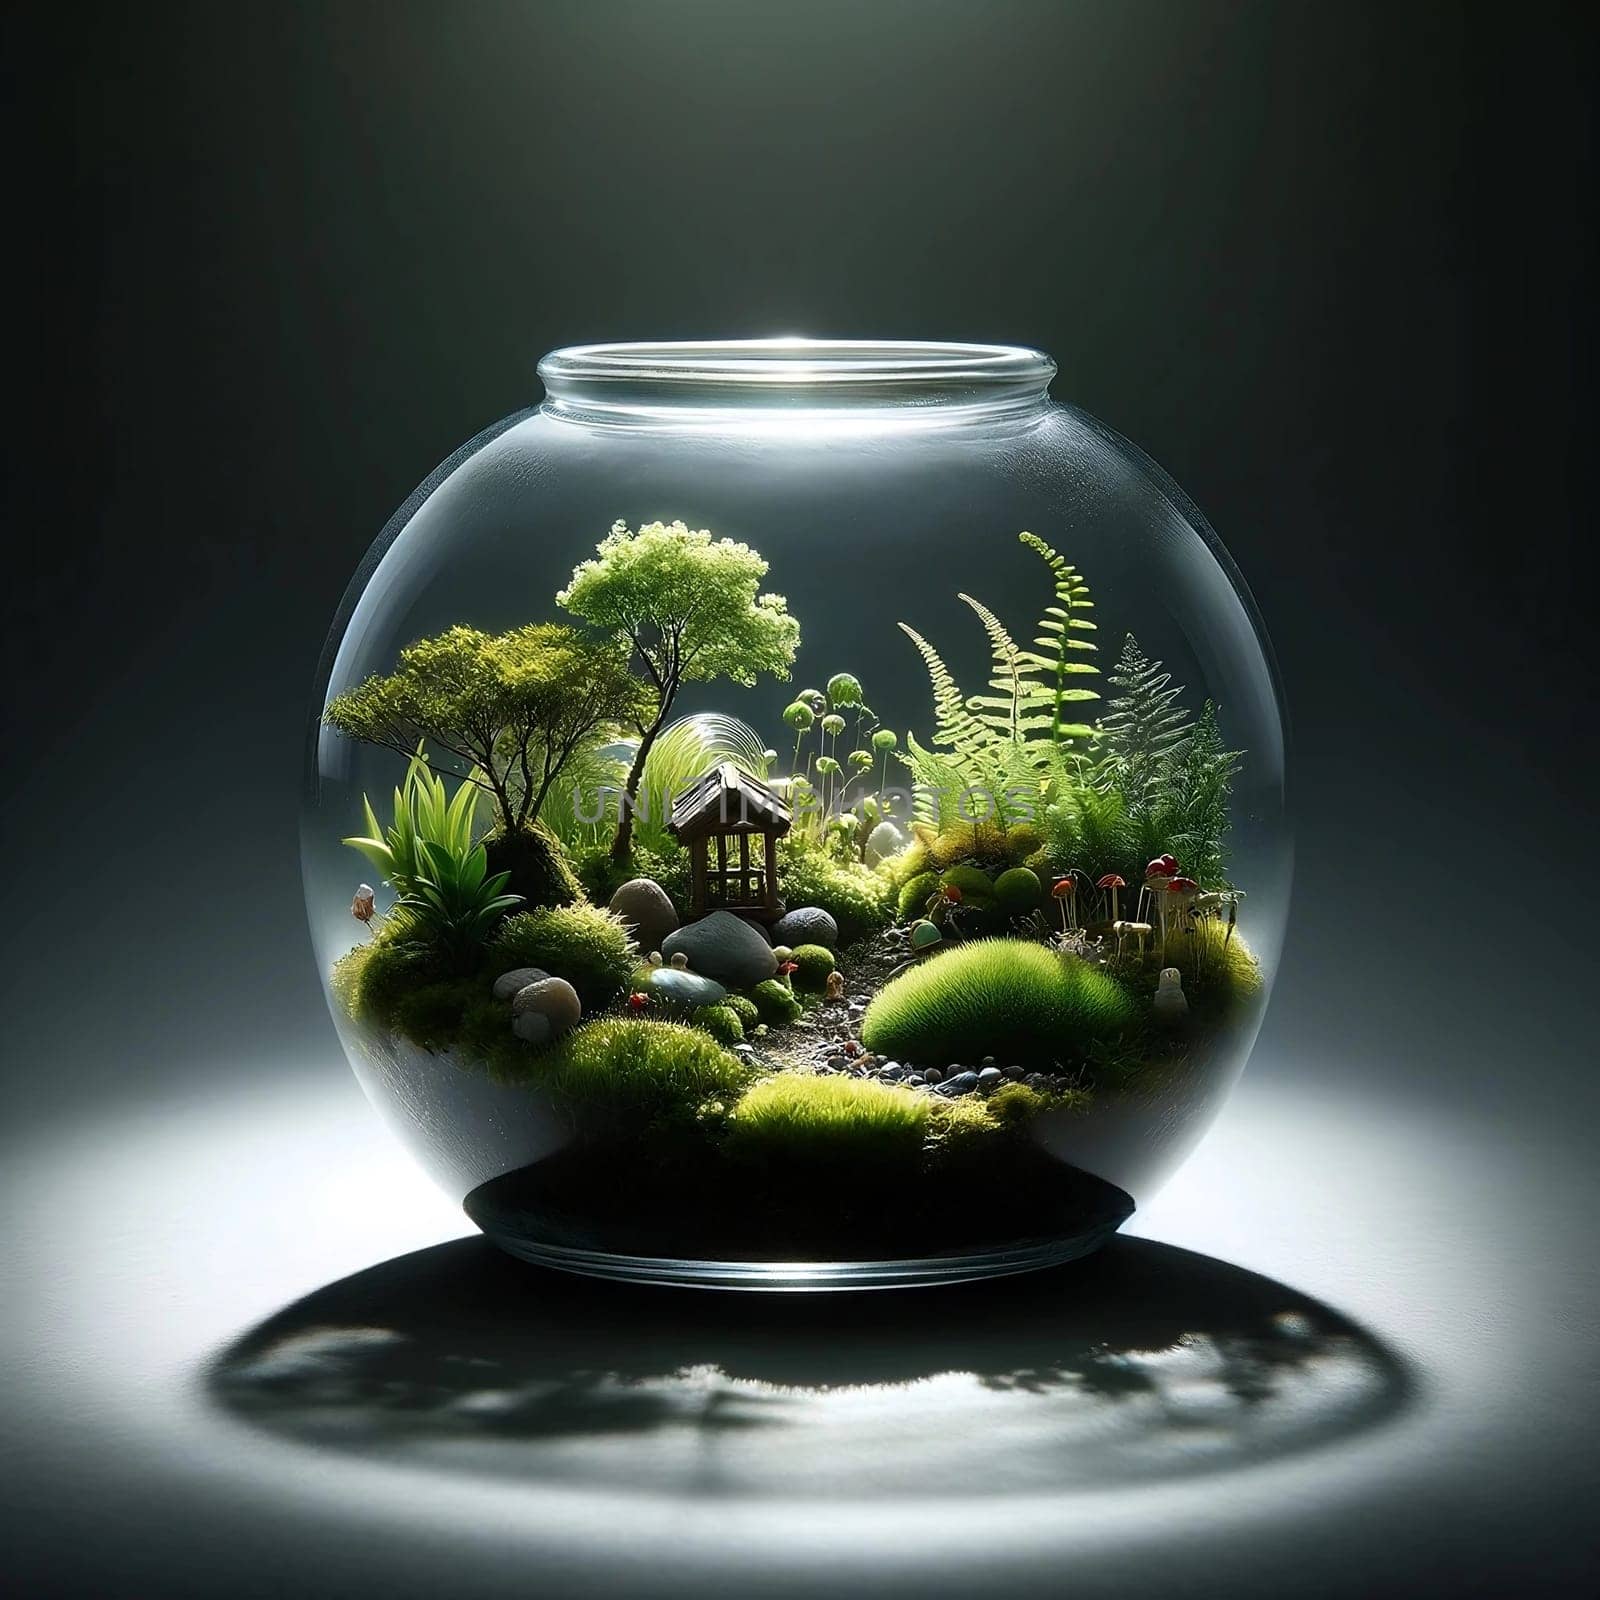 Stylish Glass jar terrarium holds a tiny Japanese garden, Studio shot. High quality photo